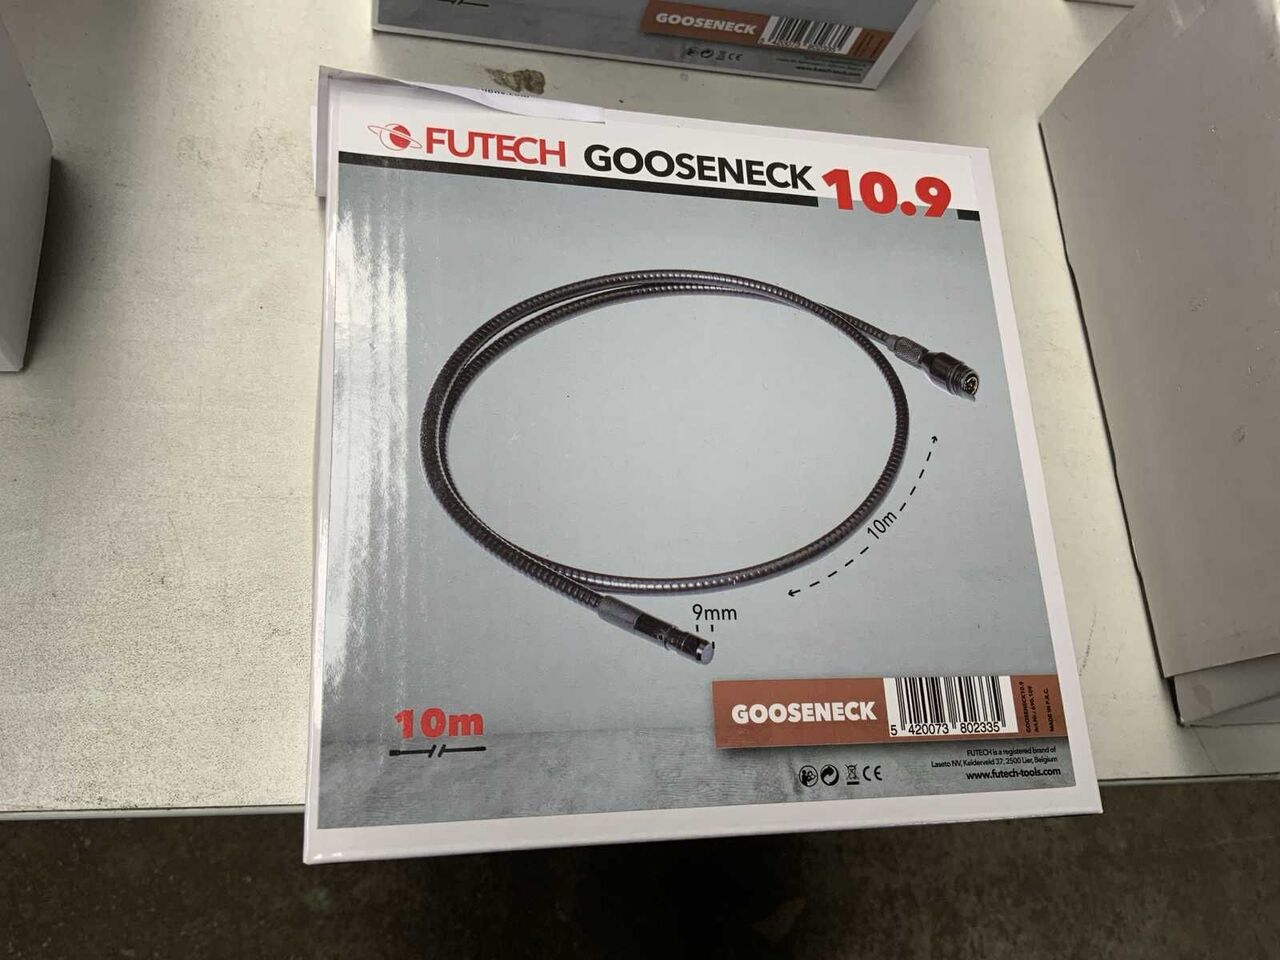 Futech Gooseneck 10.9 mērinstruments